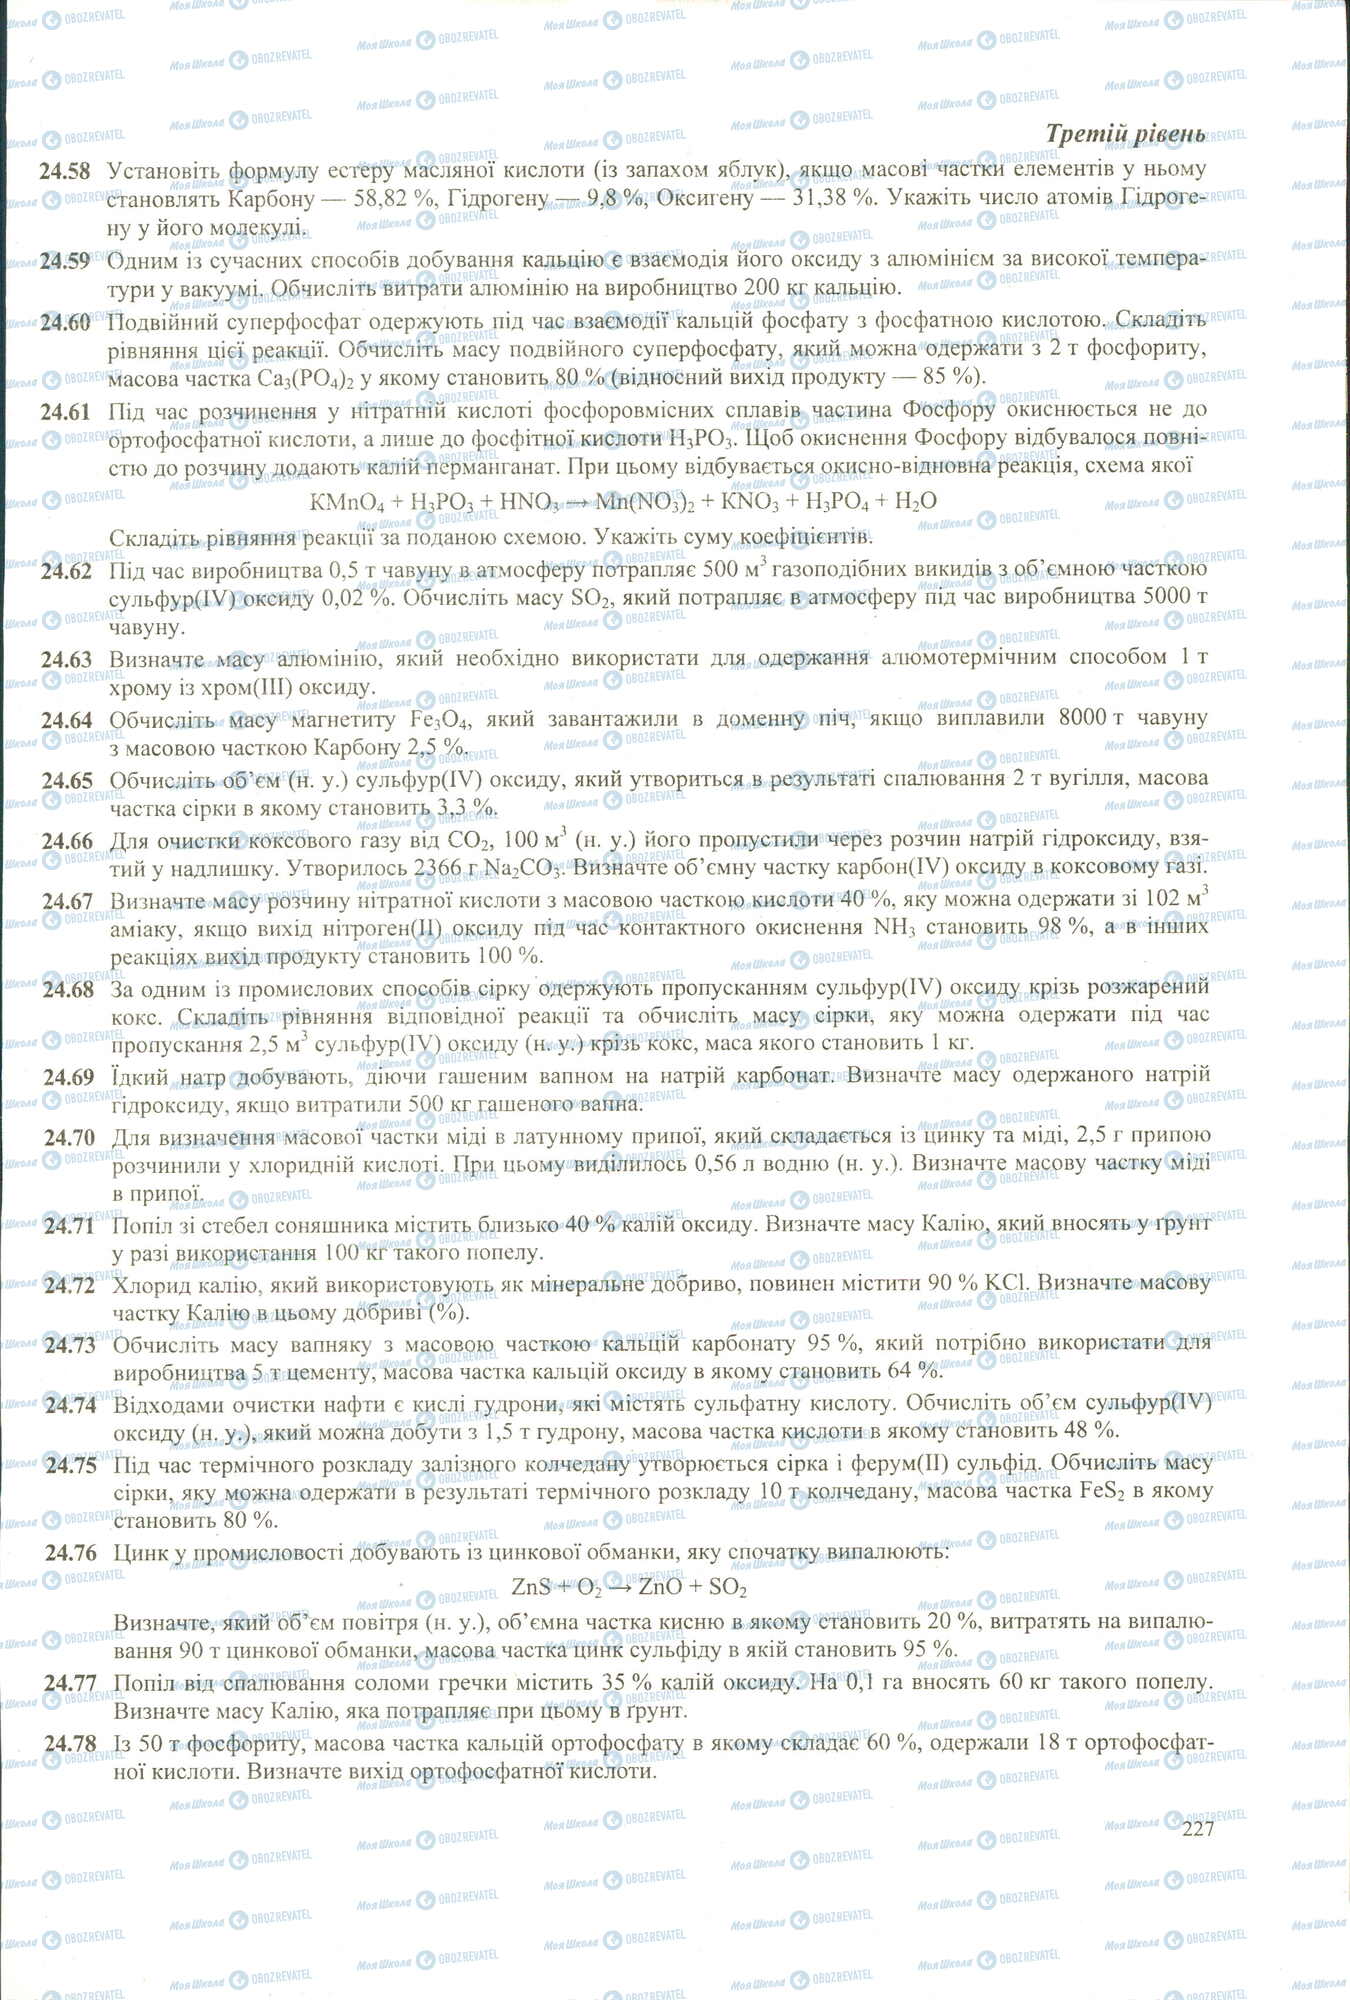 ЗНО Химия 11 класс страница 58-78